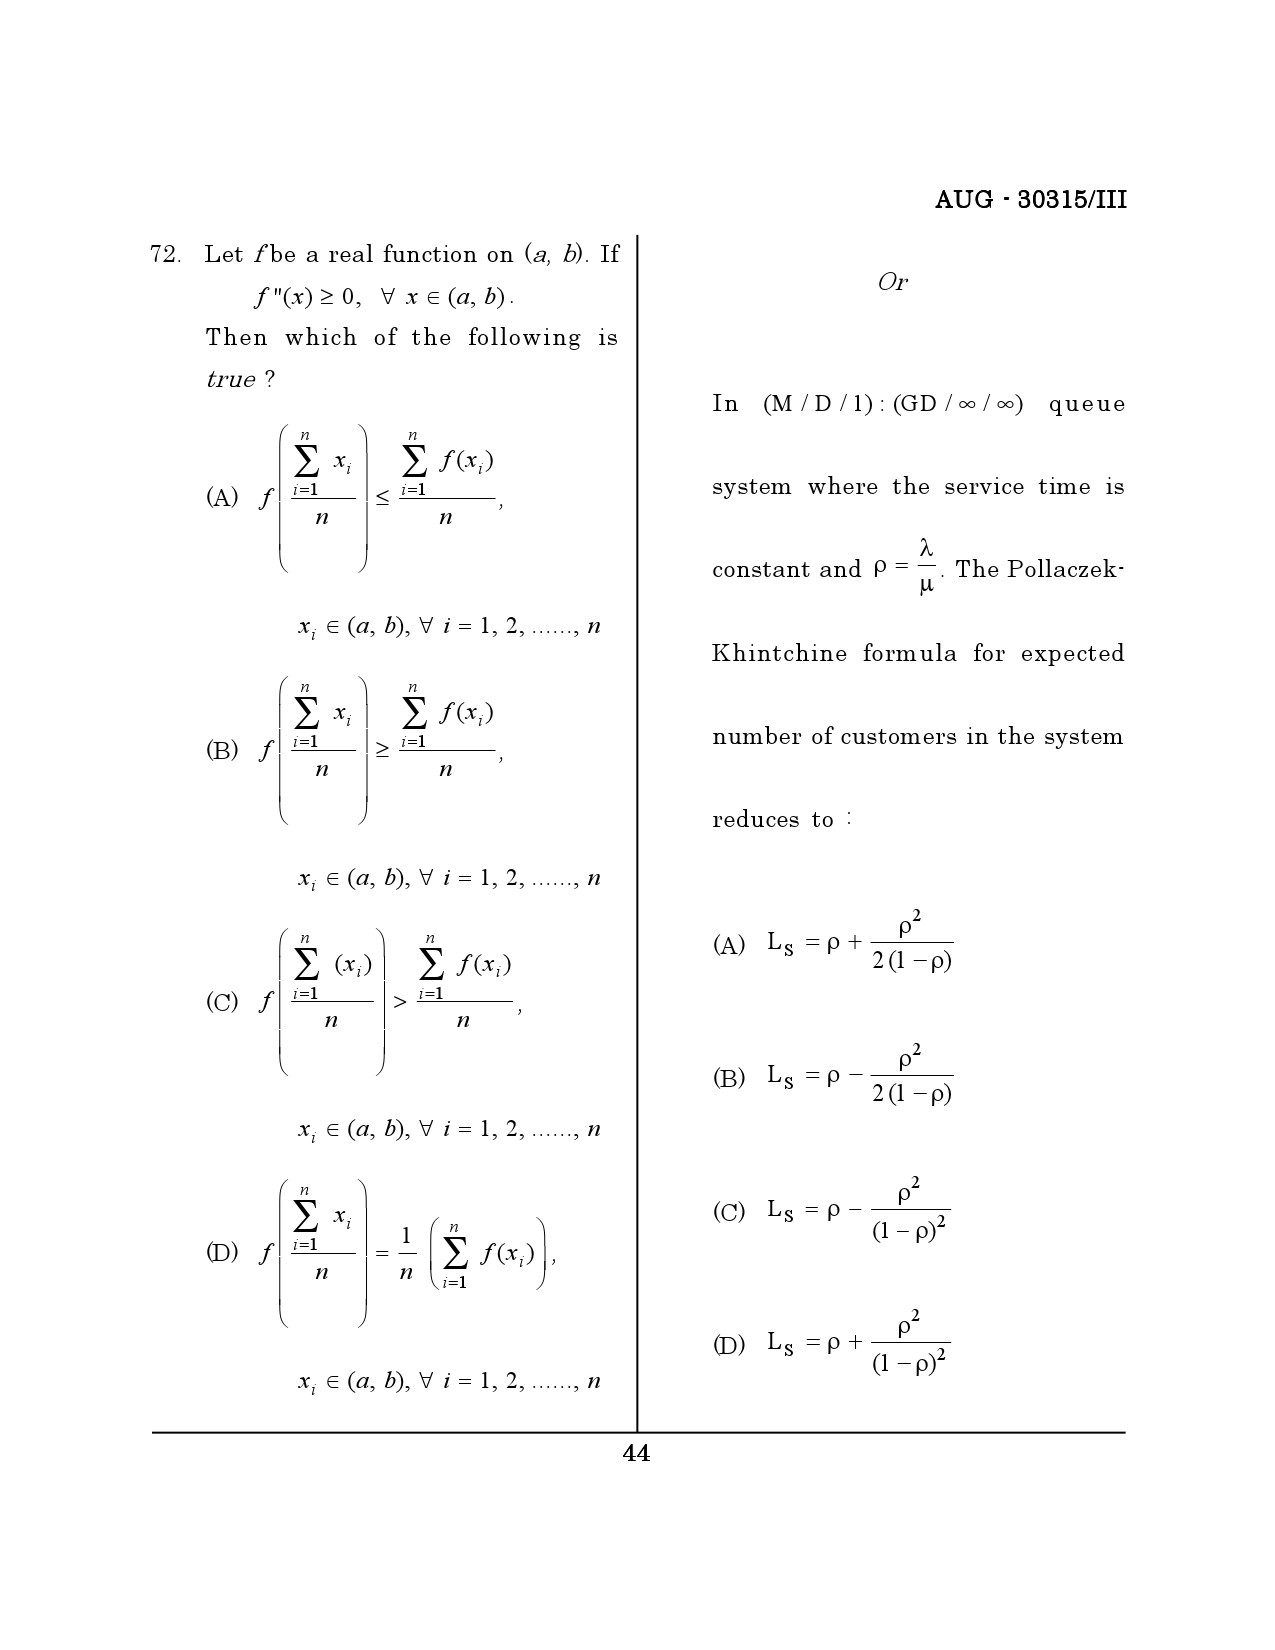 Maharashtra SET Mathematical Sciences Question Paper III August 2015 43